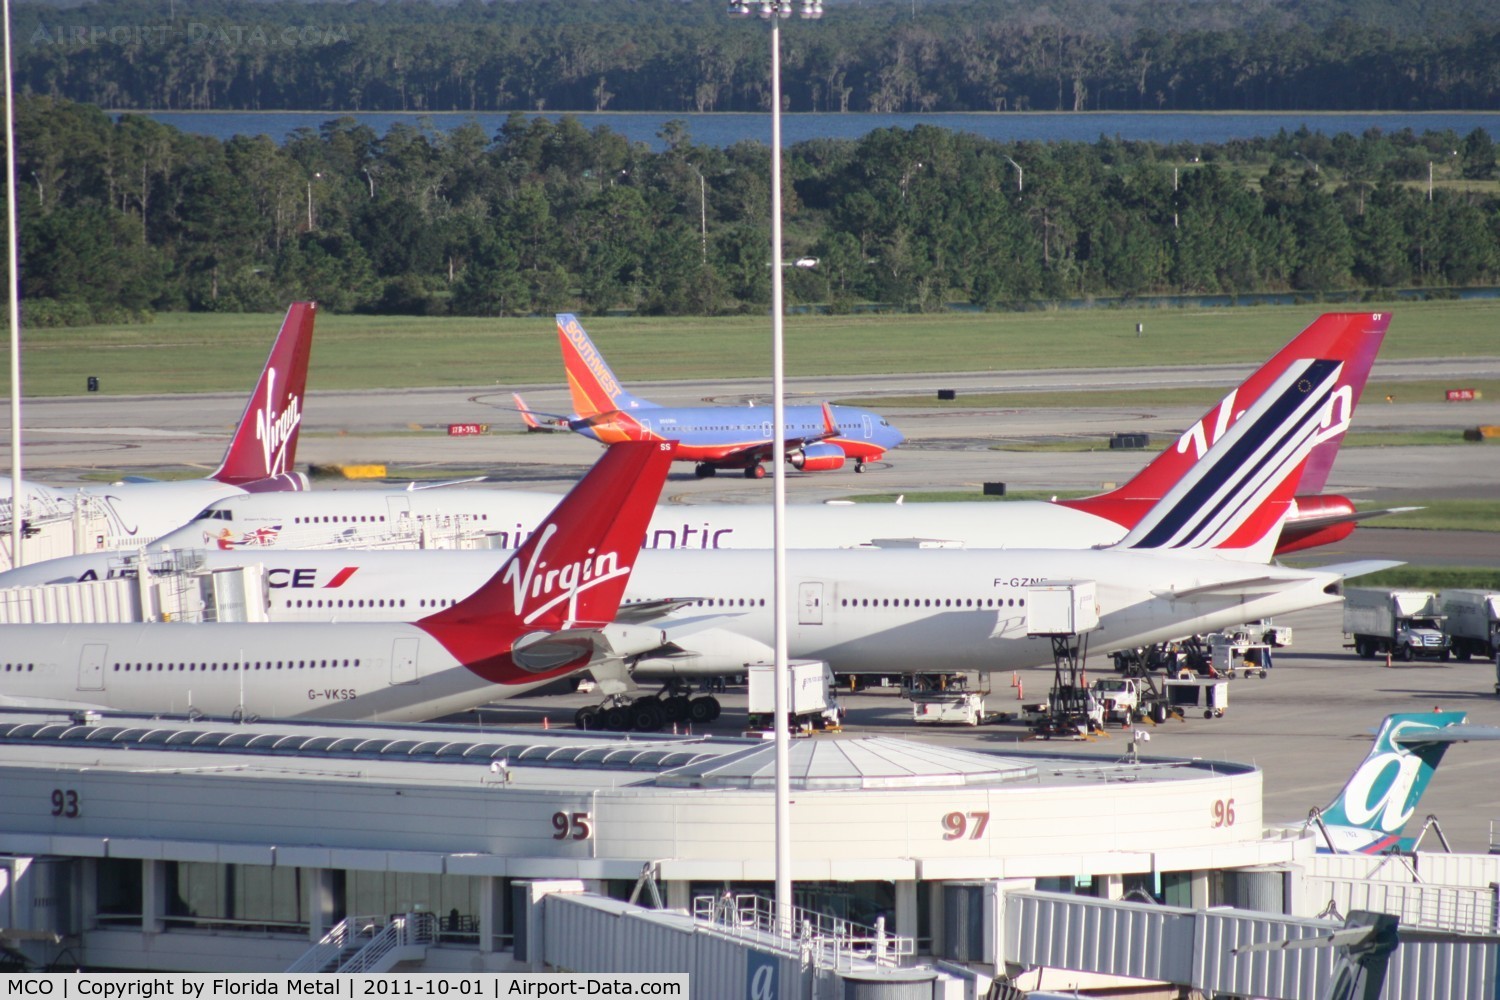 Orlando International Airport (MCO) - Airside 4 Orlando Intl with Air France and 3 Virgin Atlantic